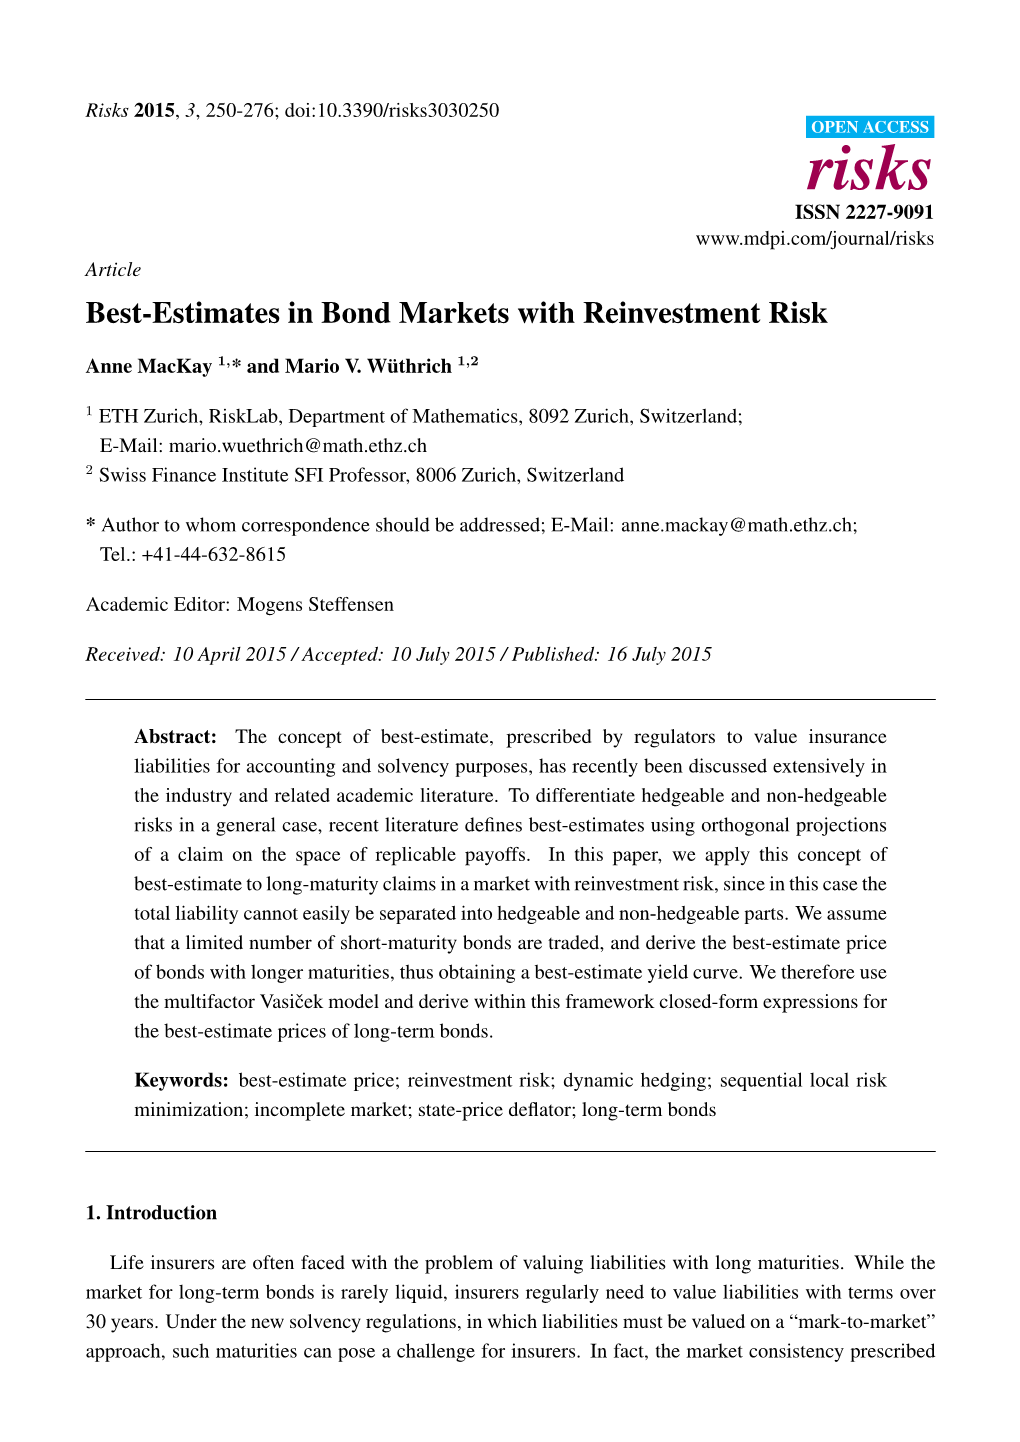 Best-Estimates in Bond Markets with Reinvestment Risk